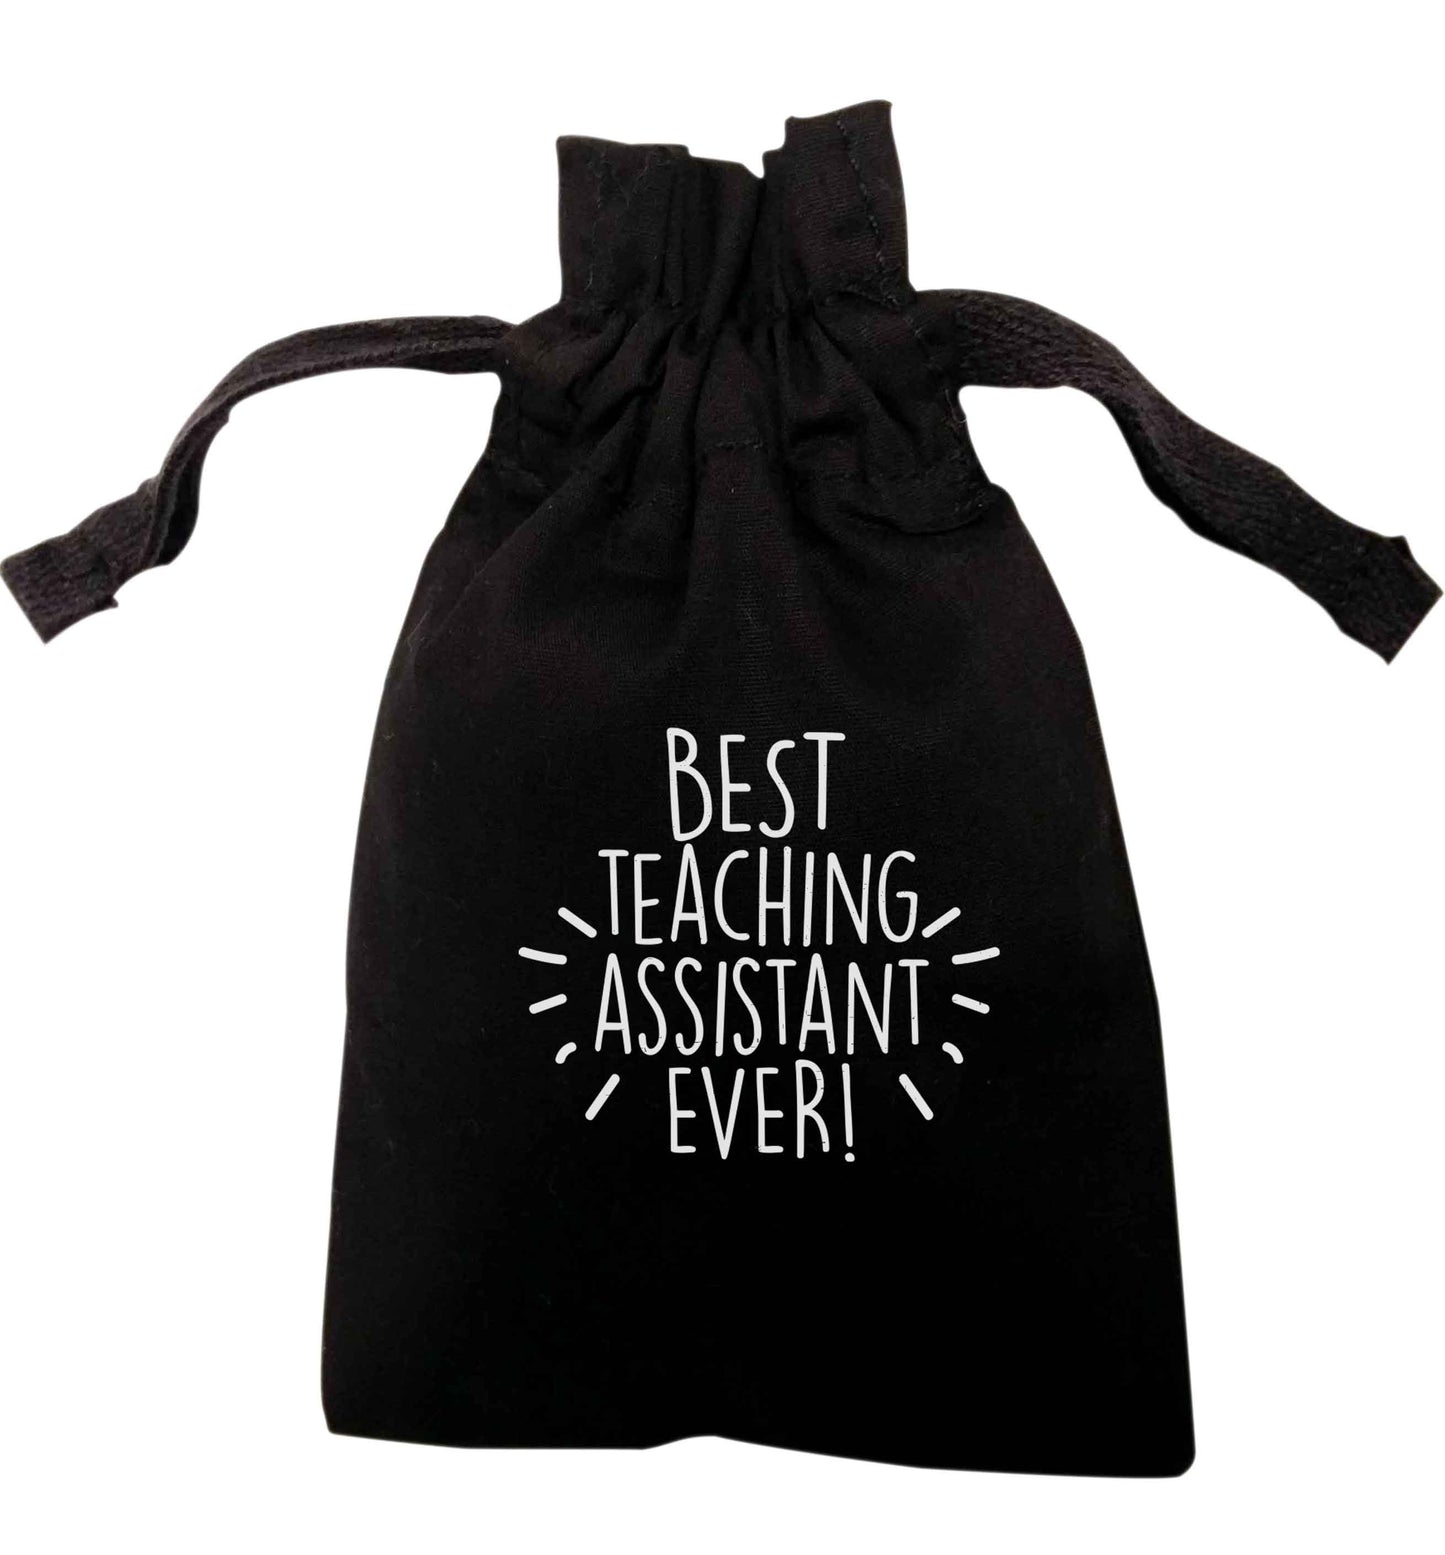 Best teaching assistant ever! | XS - L | Pouch / Drawstring bag / Sack | Organic Cotton | Bulk discounts available!